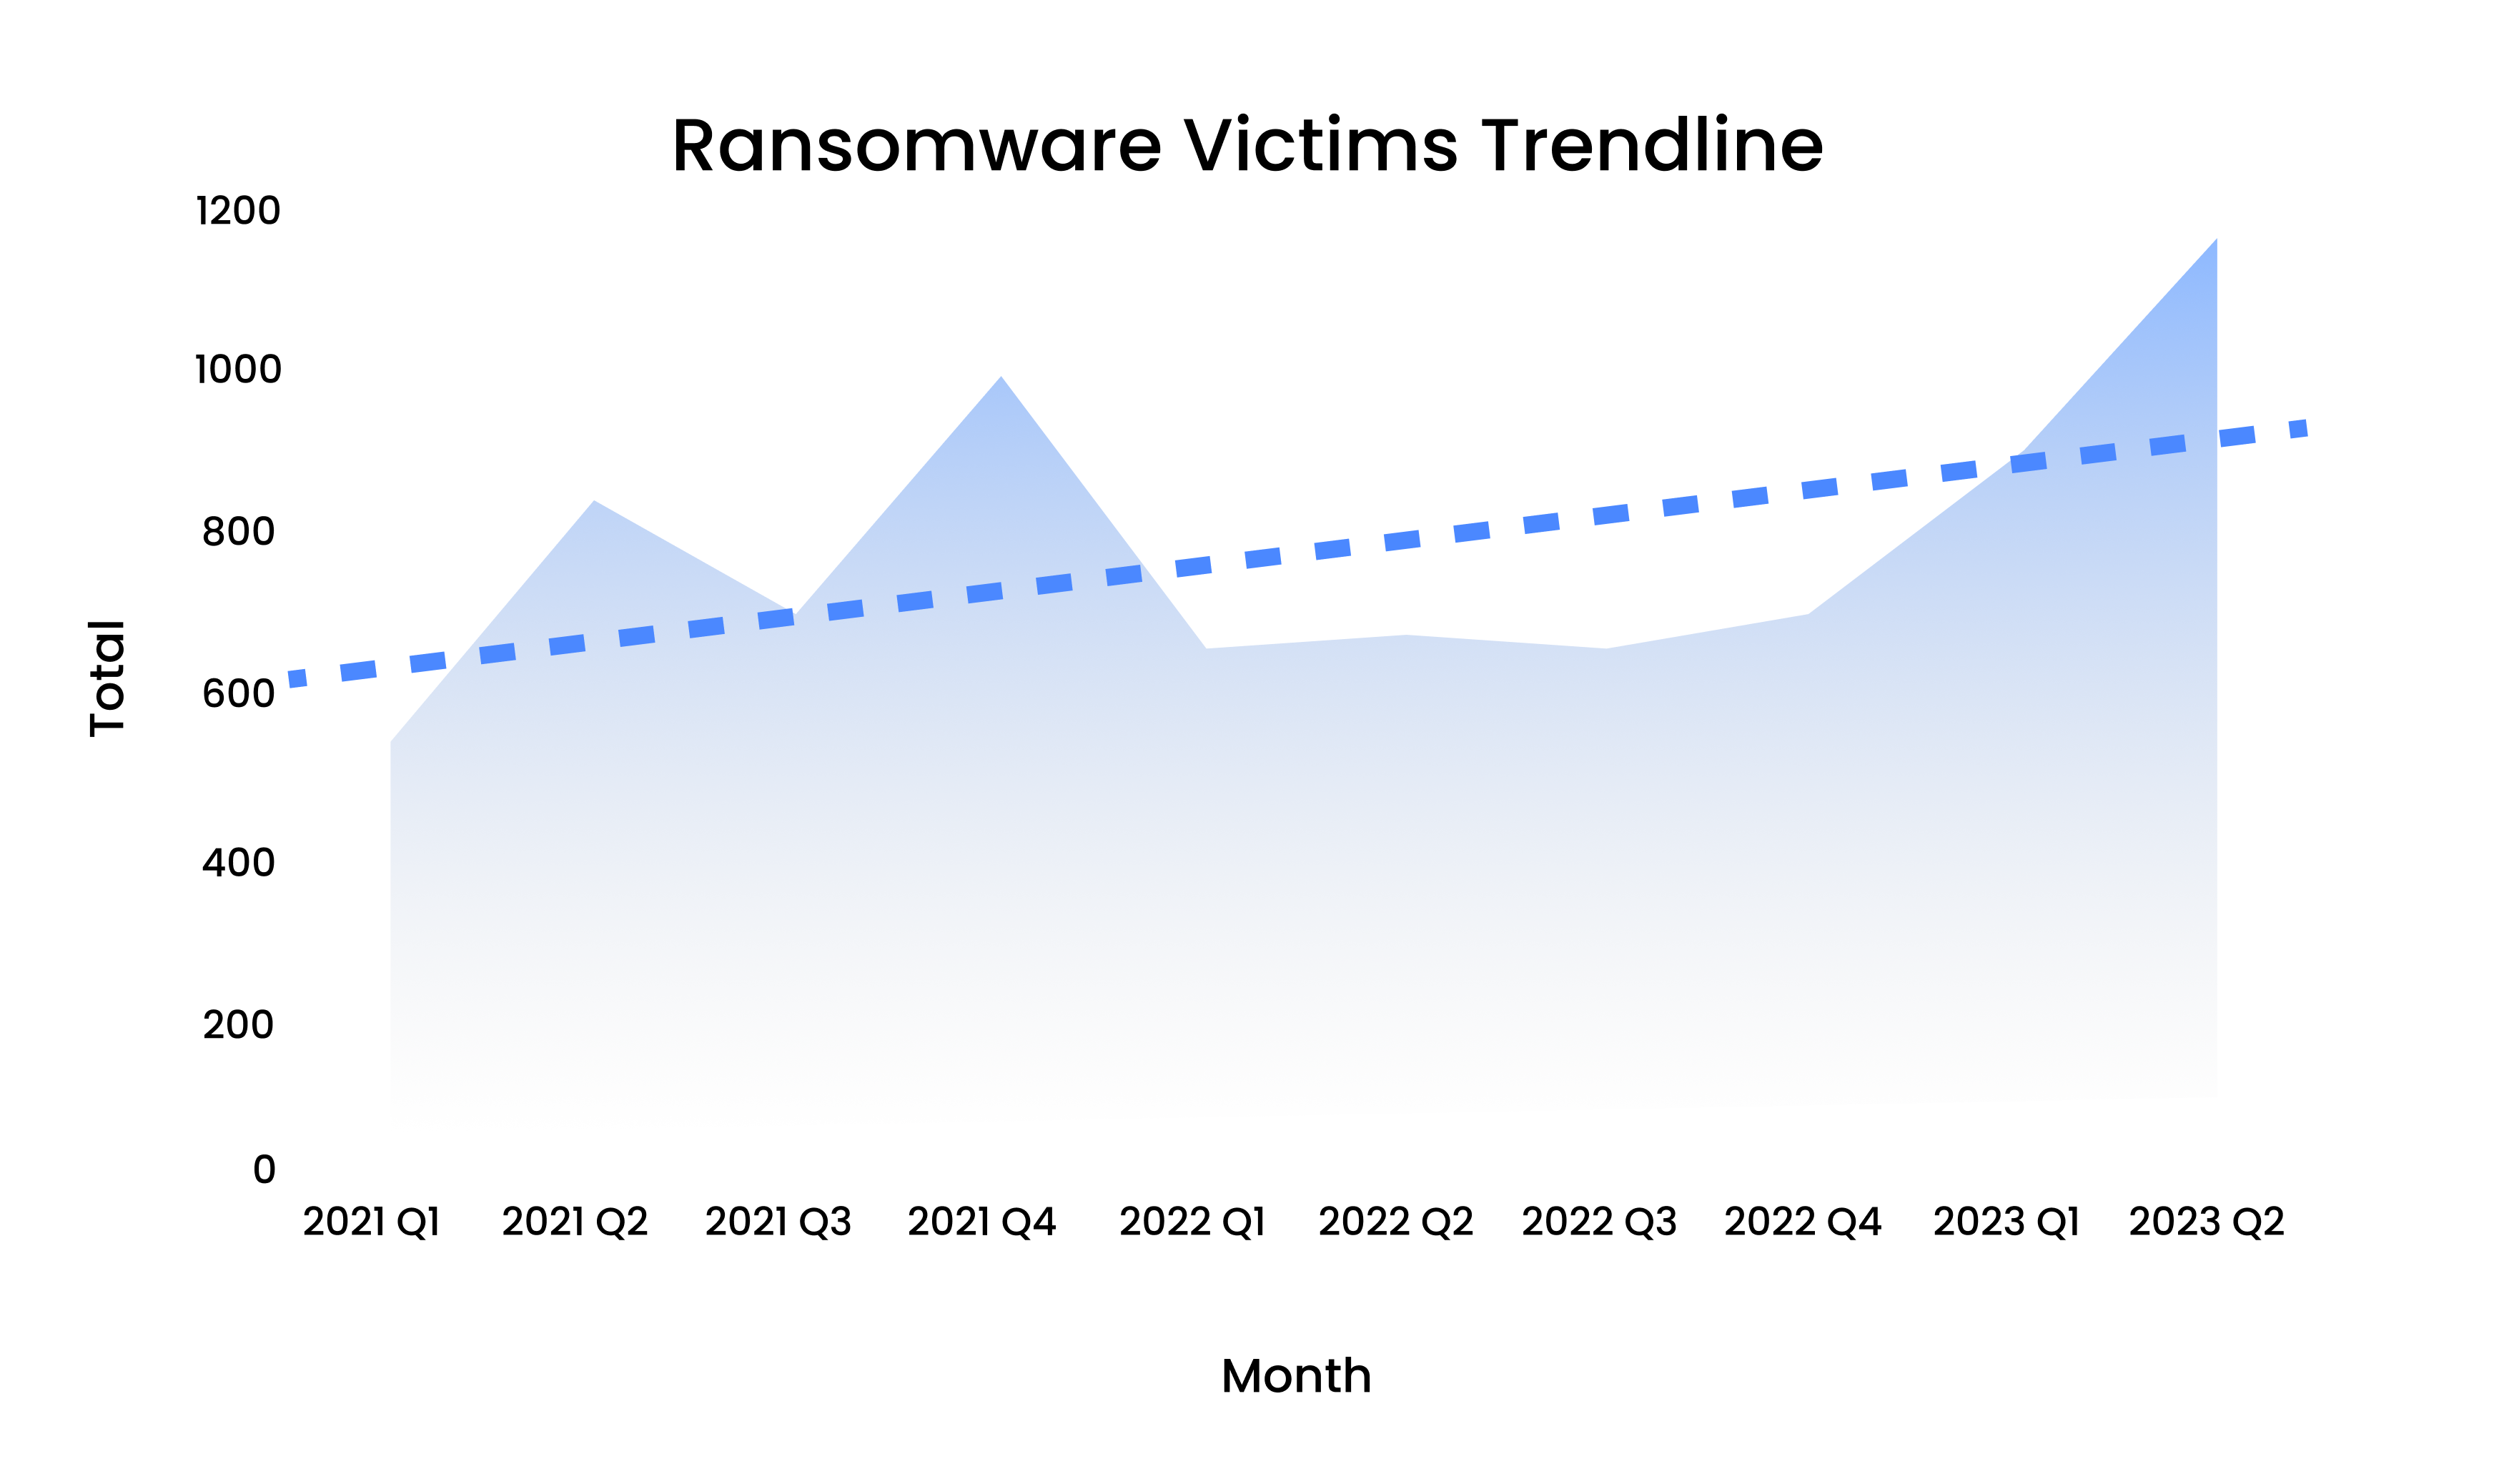 [LINE GRAPH] Ransomware Victims Trendline Q1 2021 - Q2 2023